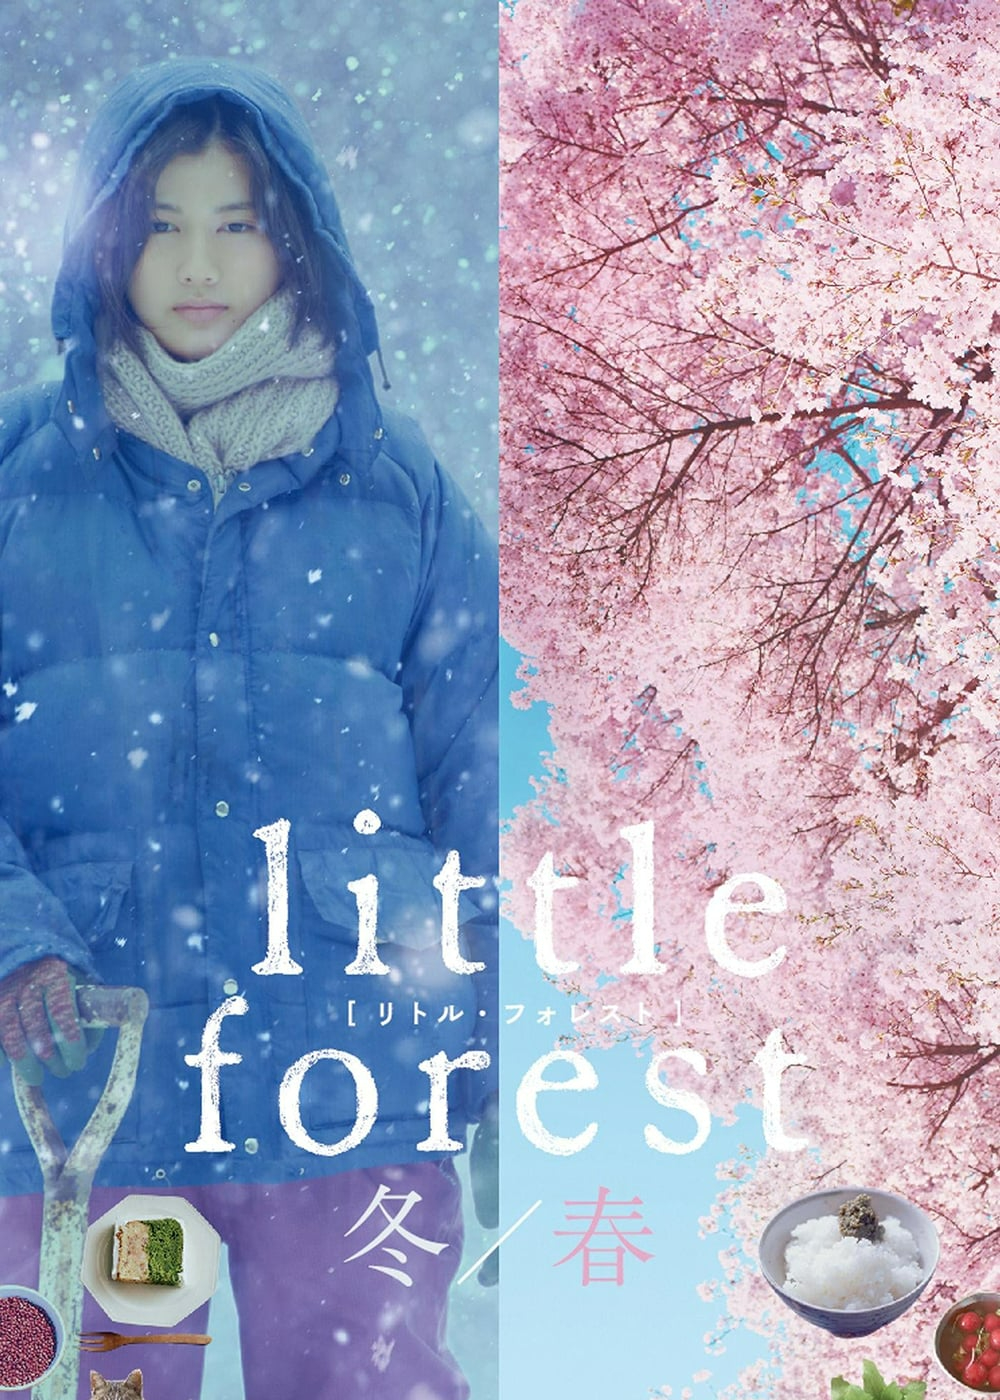 Khu Rừng Nhỏ: Đông/Xuân - Little Forest: Winter/Spring (2015)